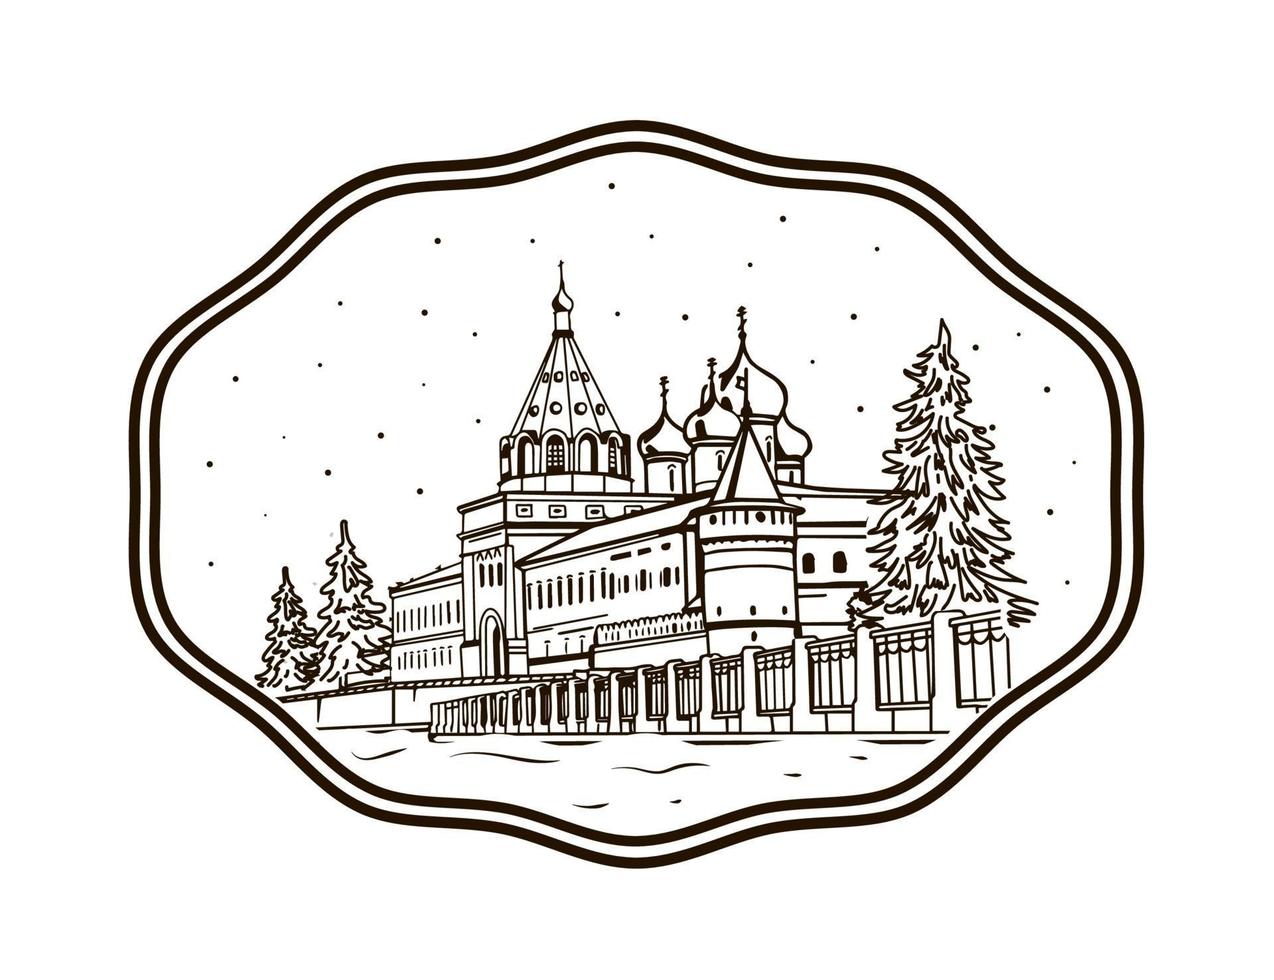 ipatiev kloster in kostroma im winter vektor